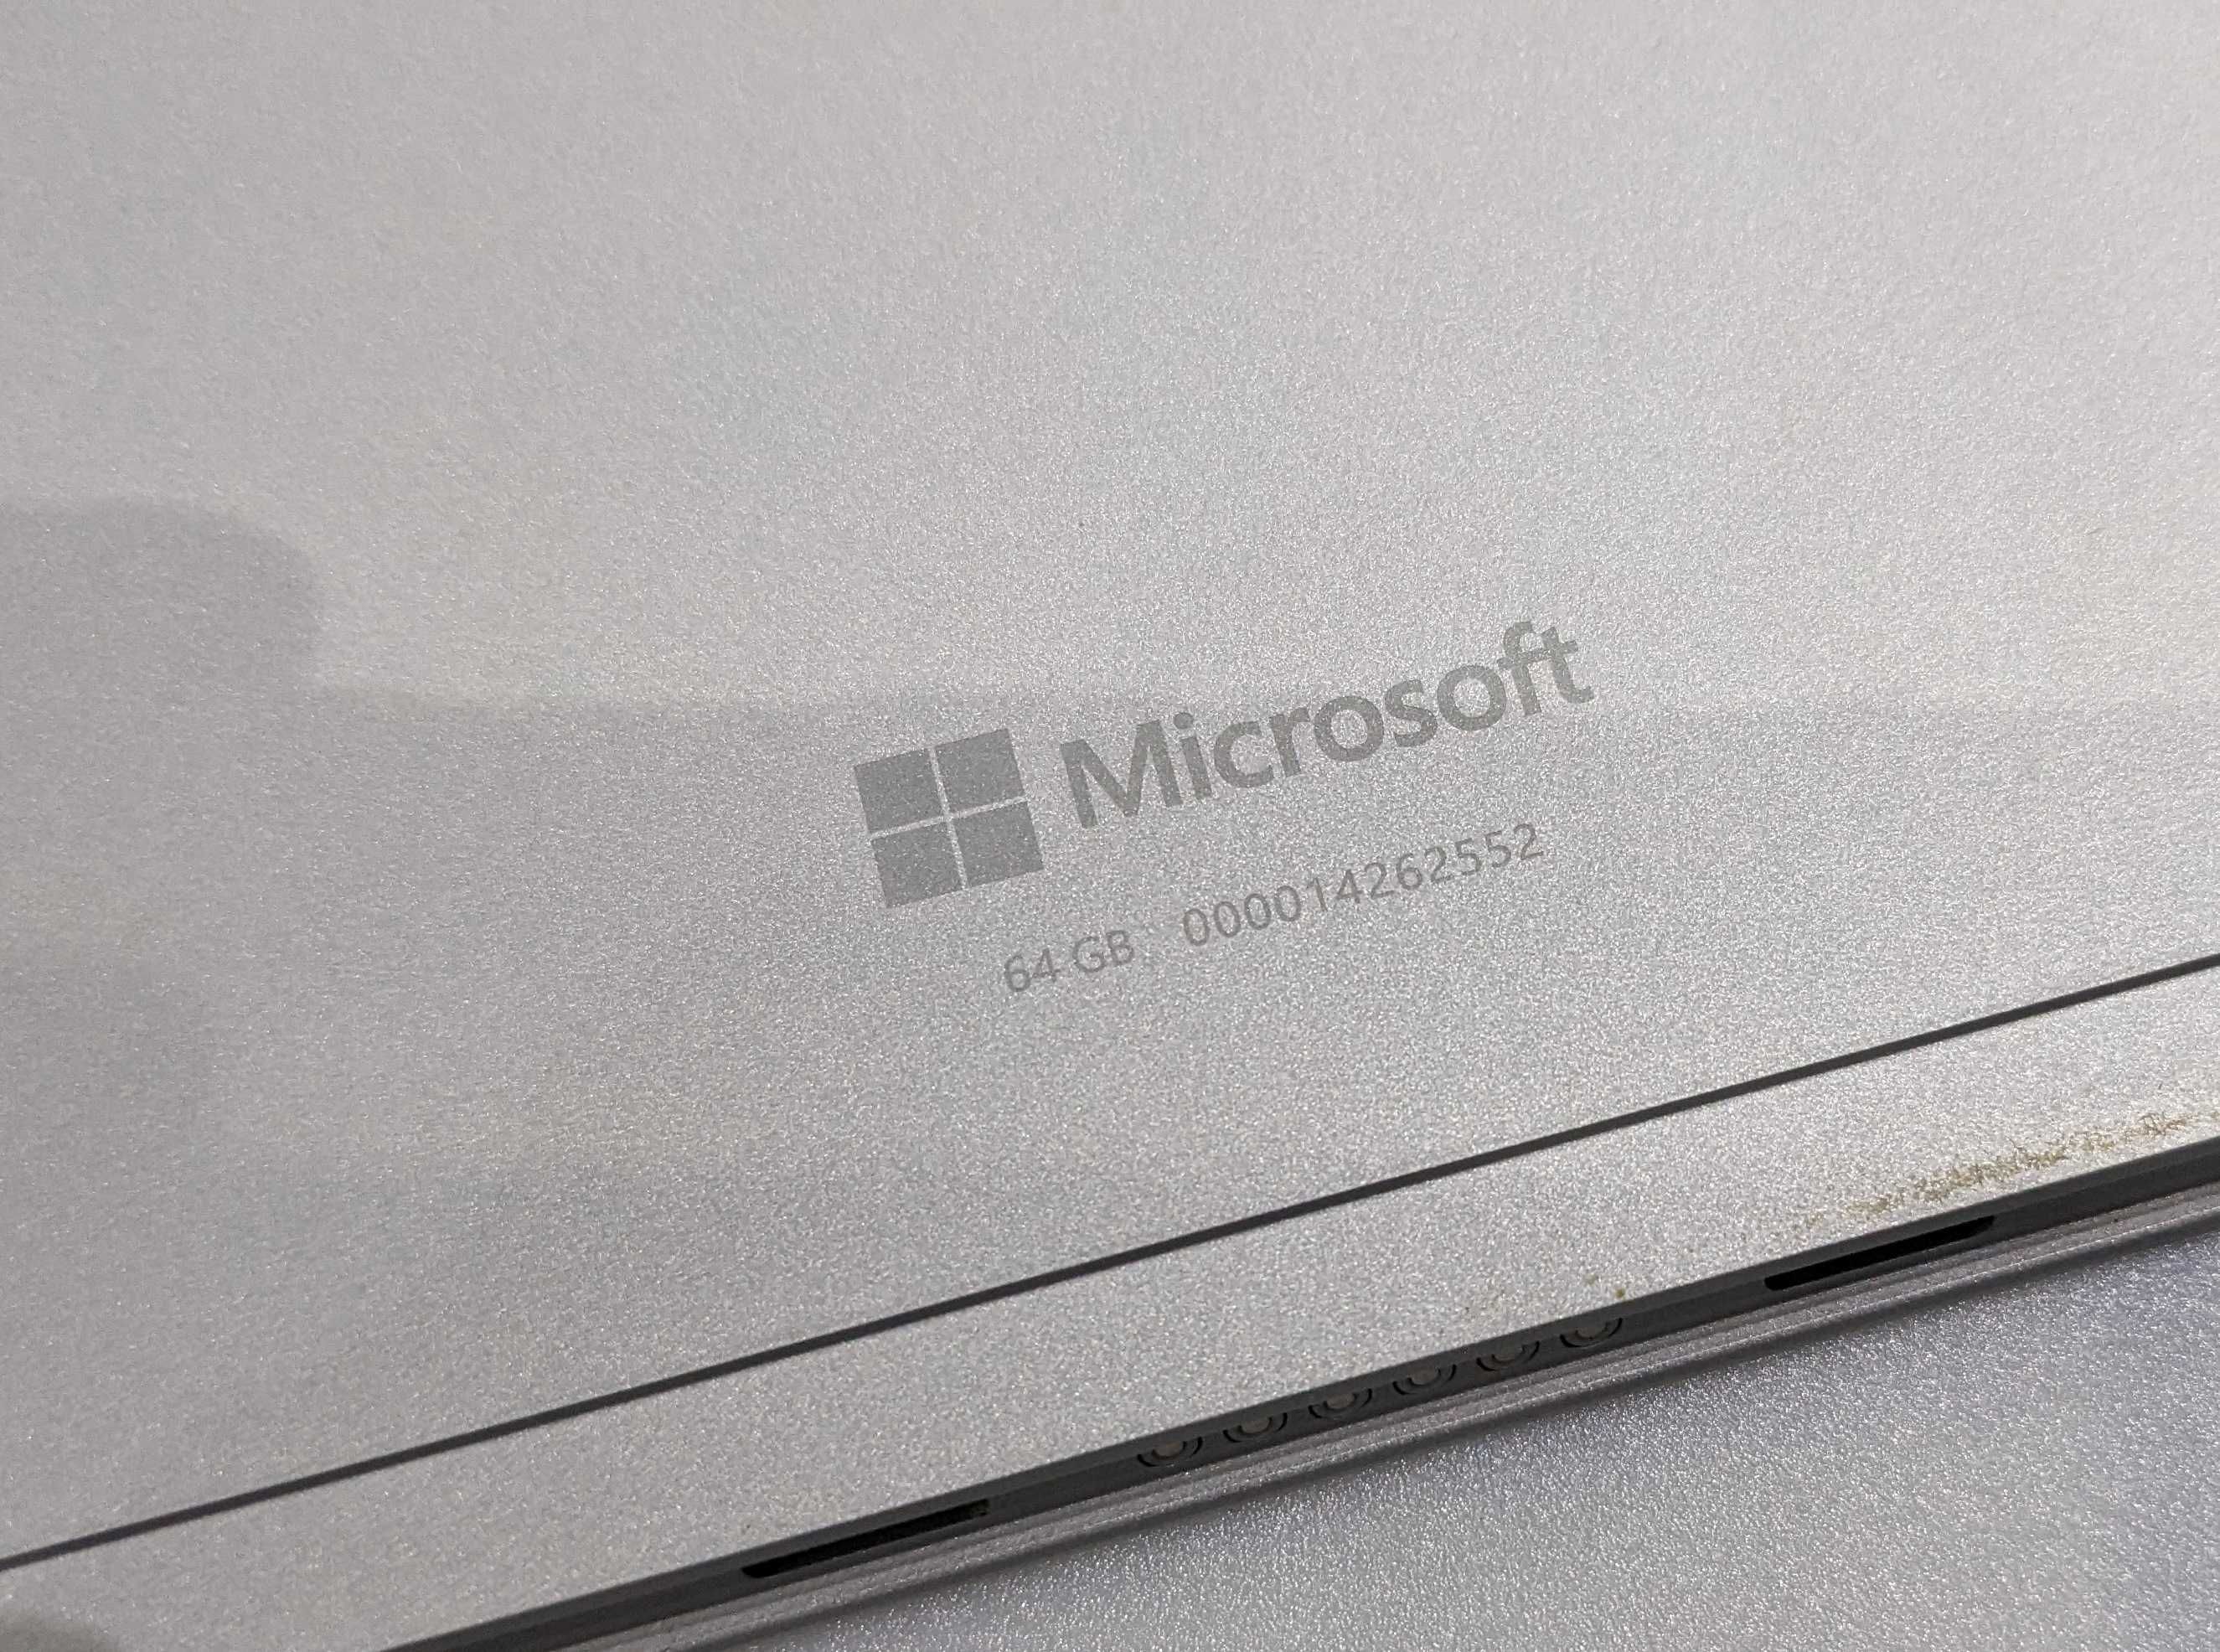 Microsoft surface 3 1657 планшет - на запчасти